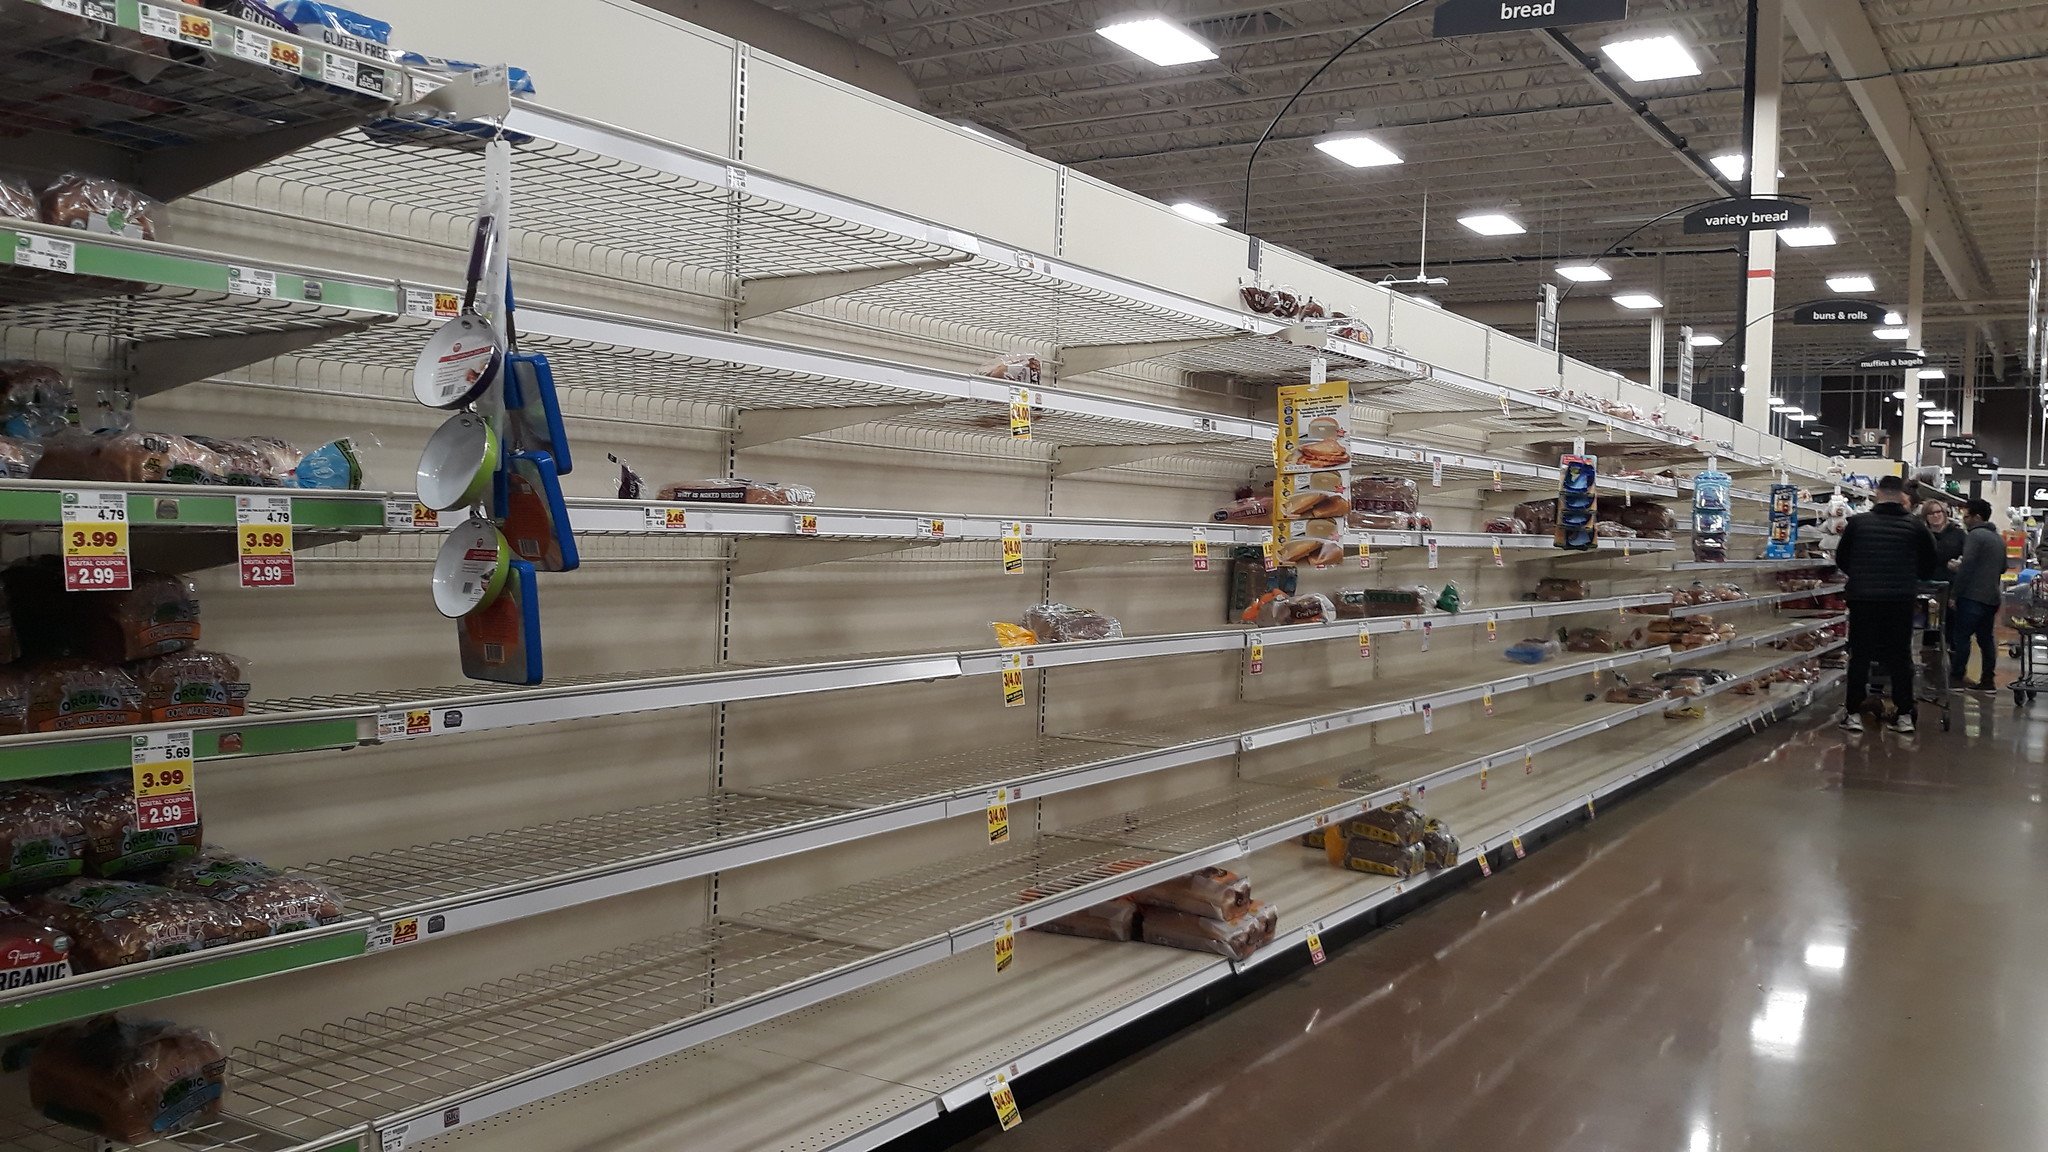 Covid-19 panic buying leaves shelves empty on March 12, 2020, in Washington, USA | Photo: Flickr/Wonderlane